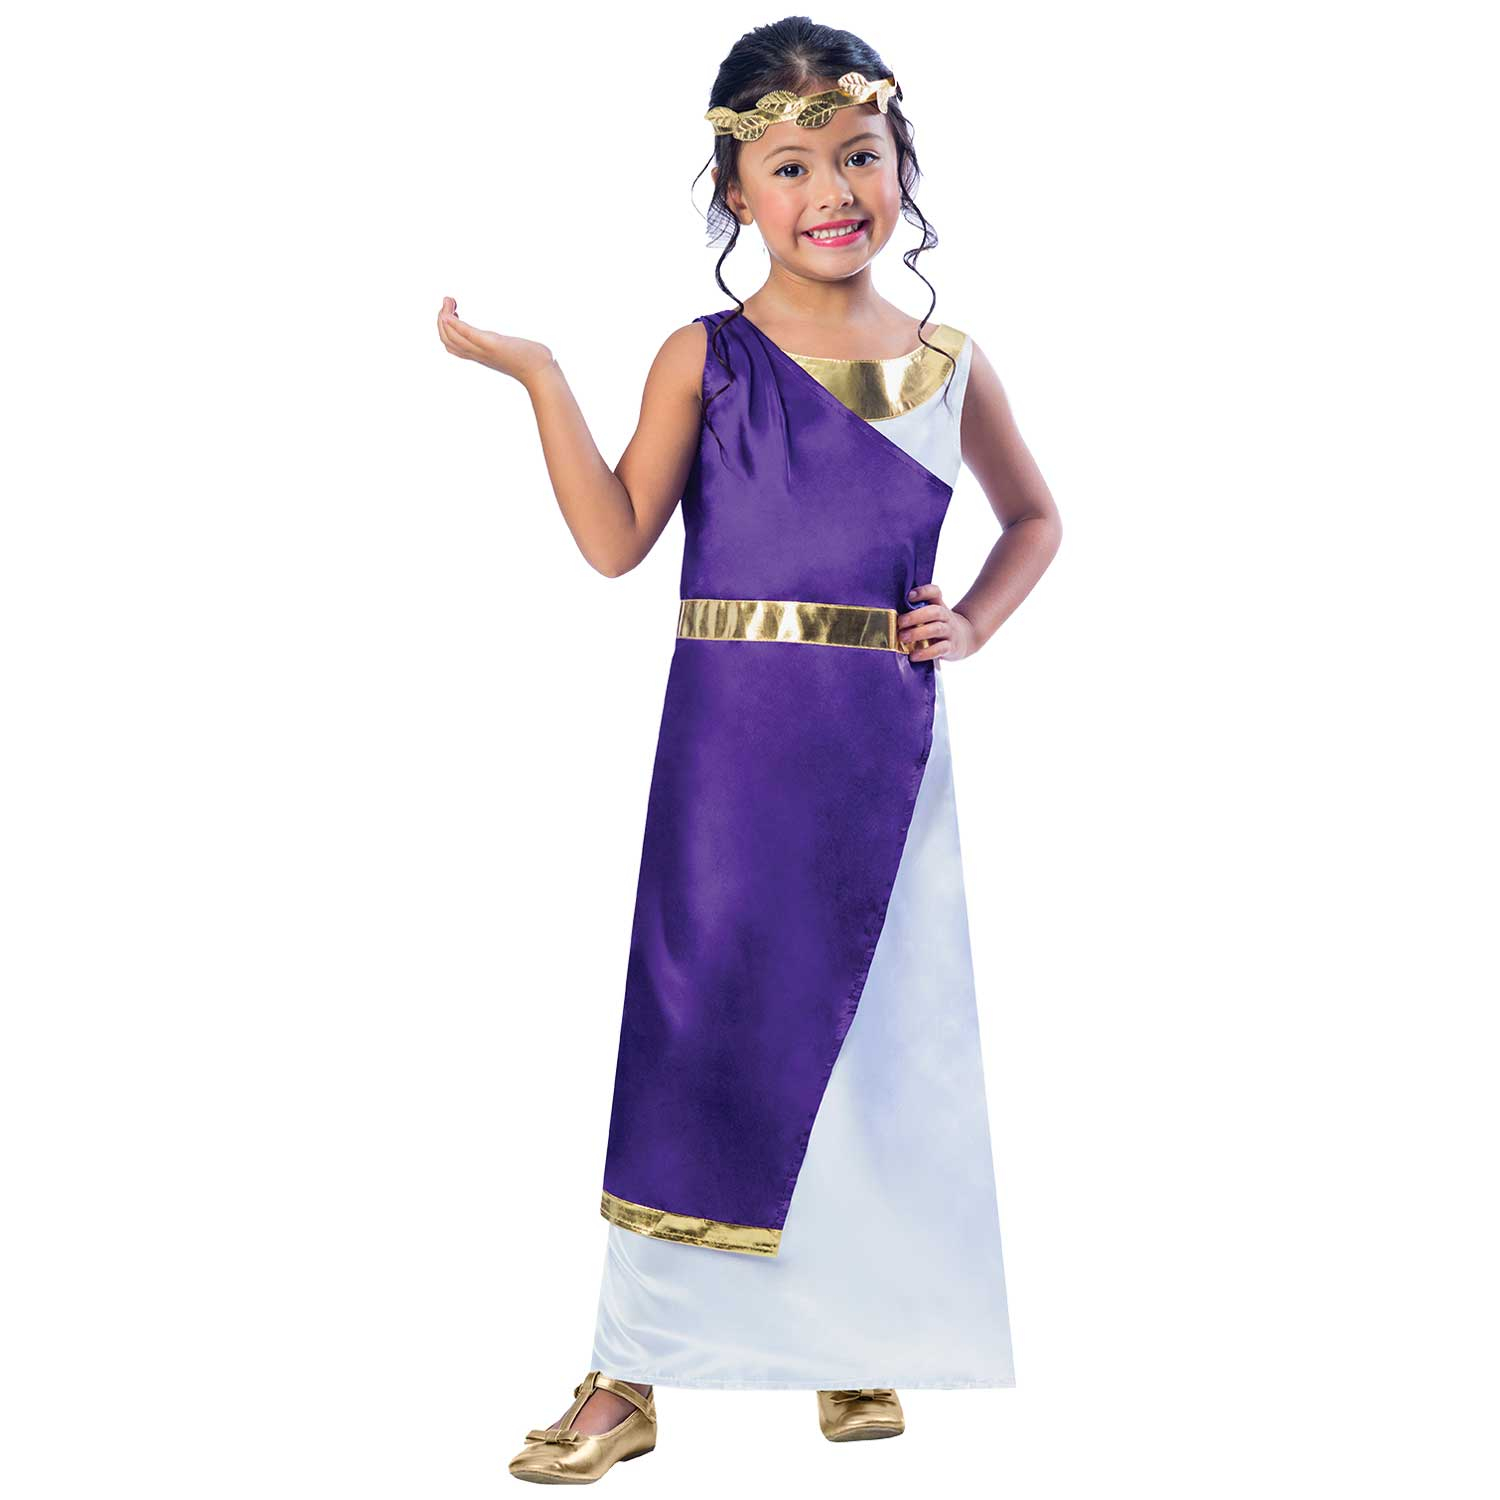 Roman Girl Costume - Age 3-4 Years - 1 PC : Amscan International